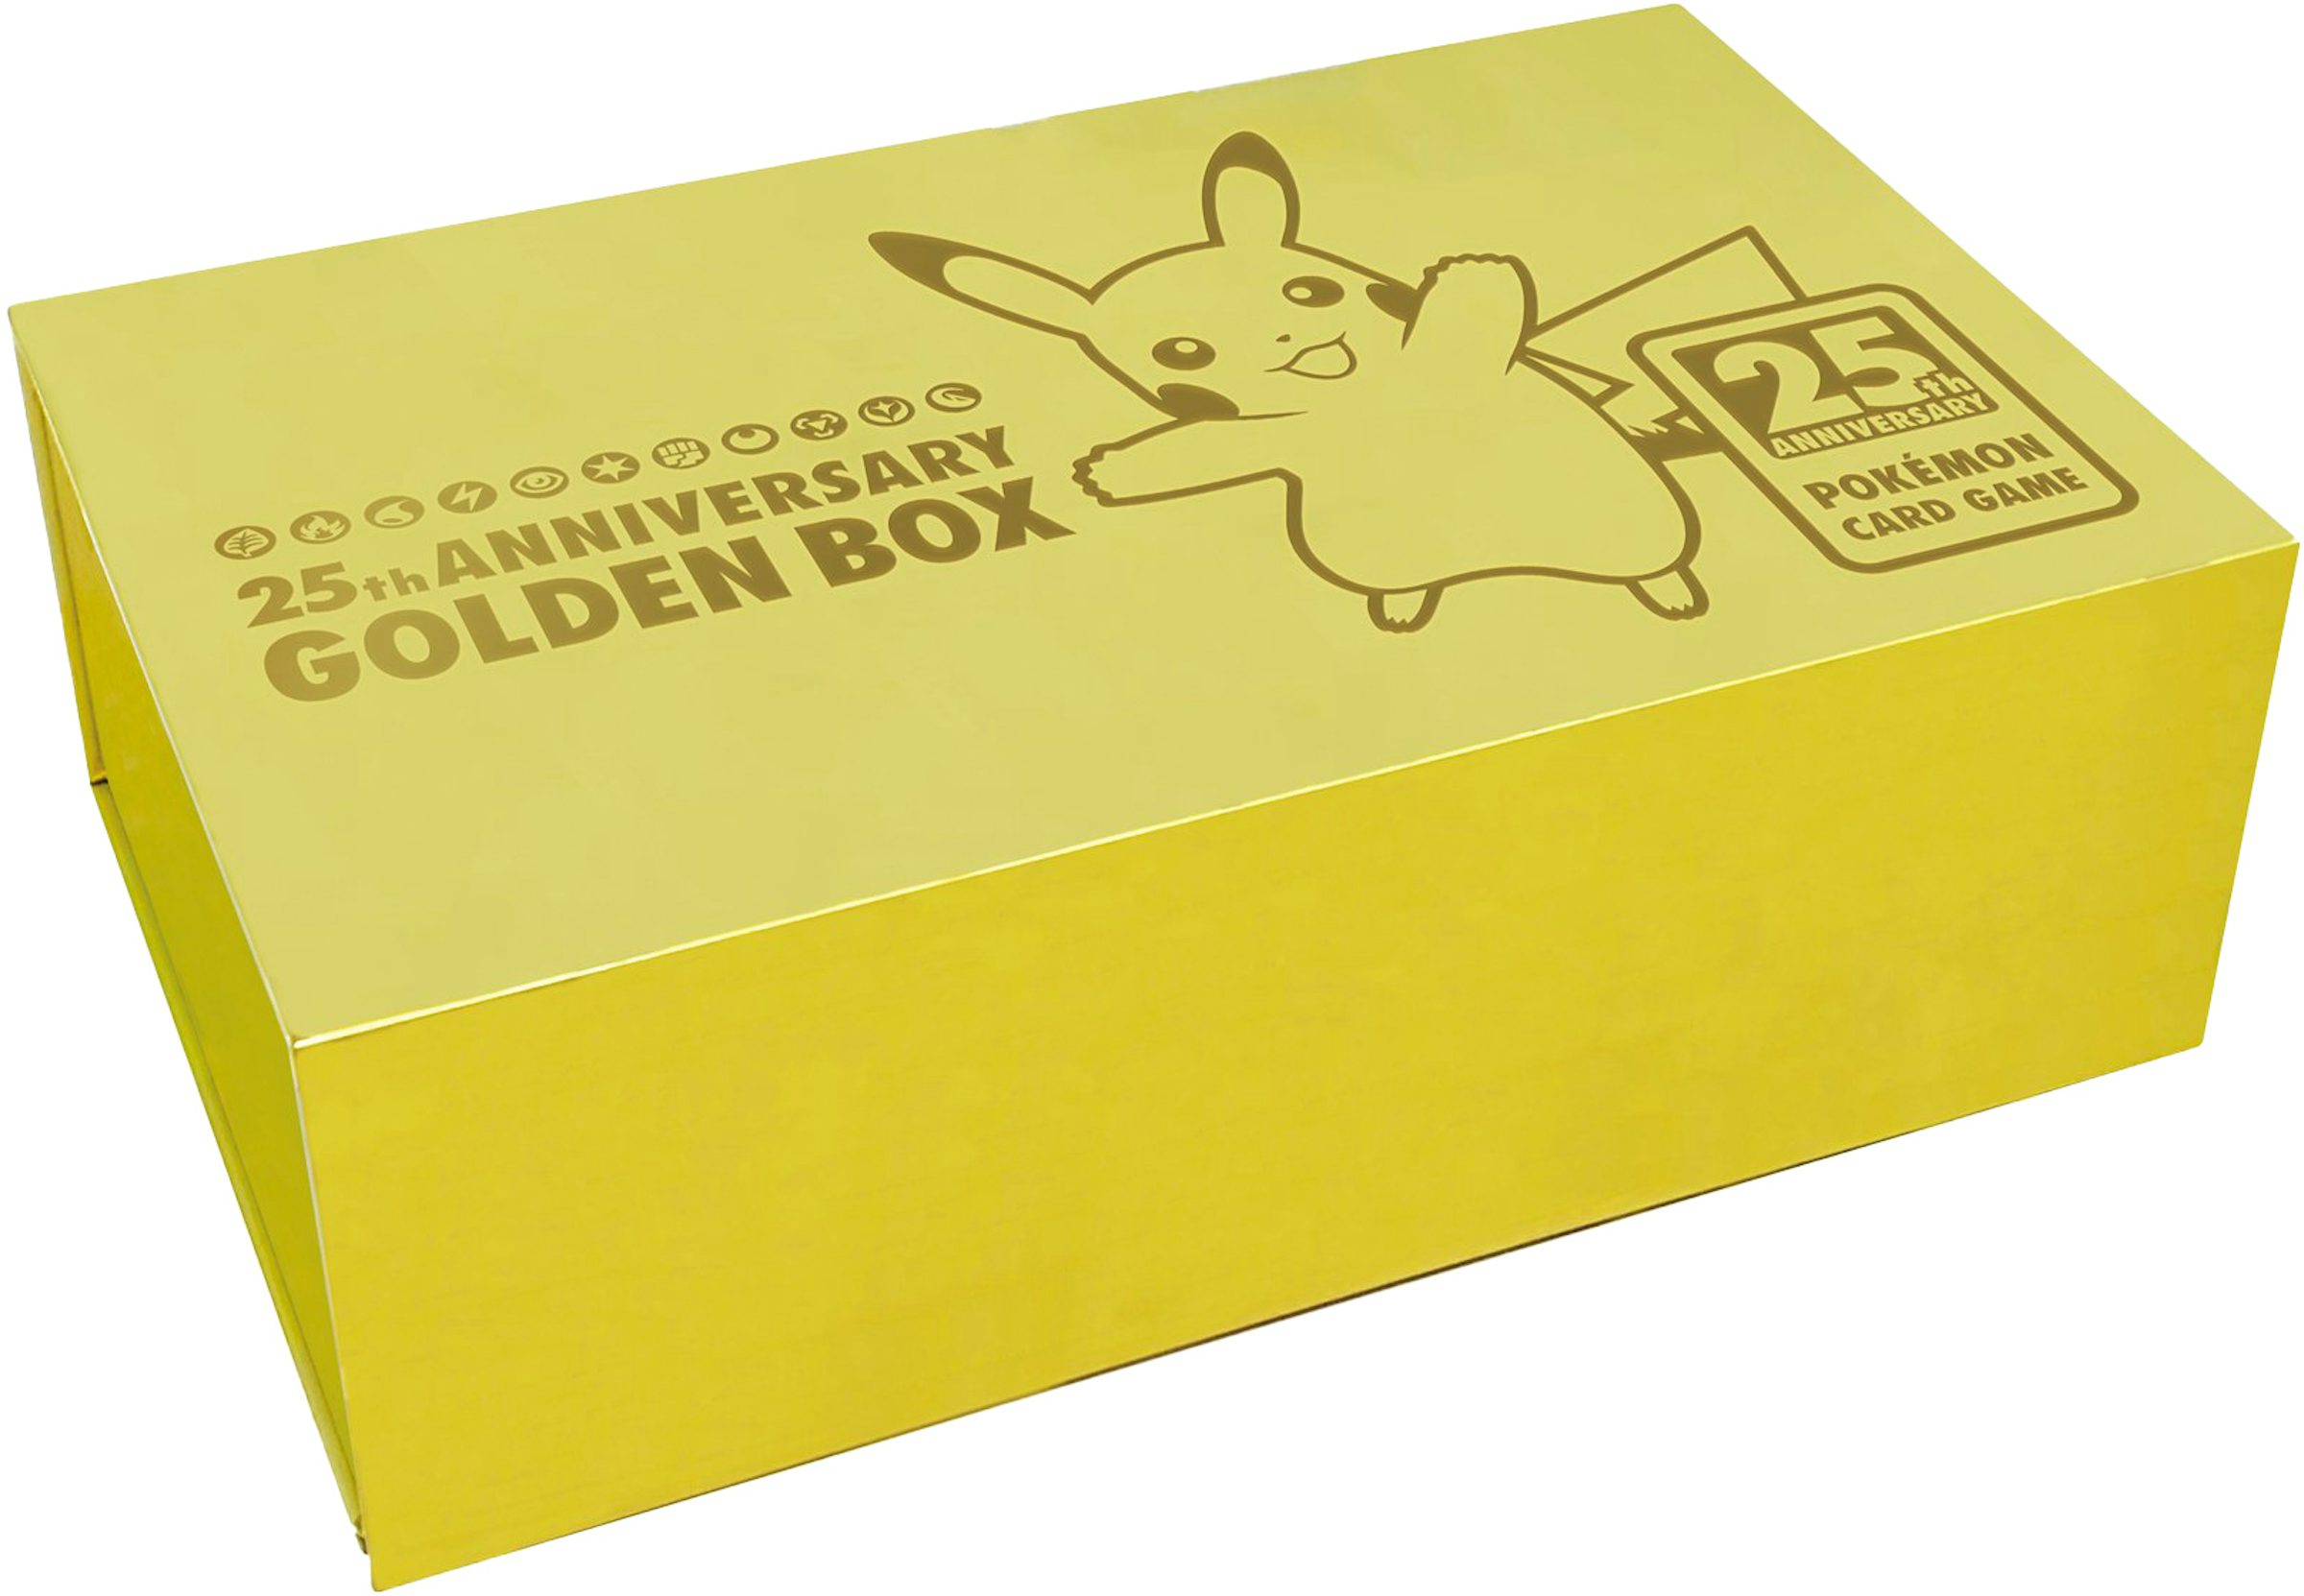 Pokémon TCG Sword & Shield Pokémon GO Booster Box (Japanese) - US